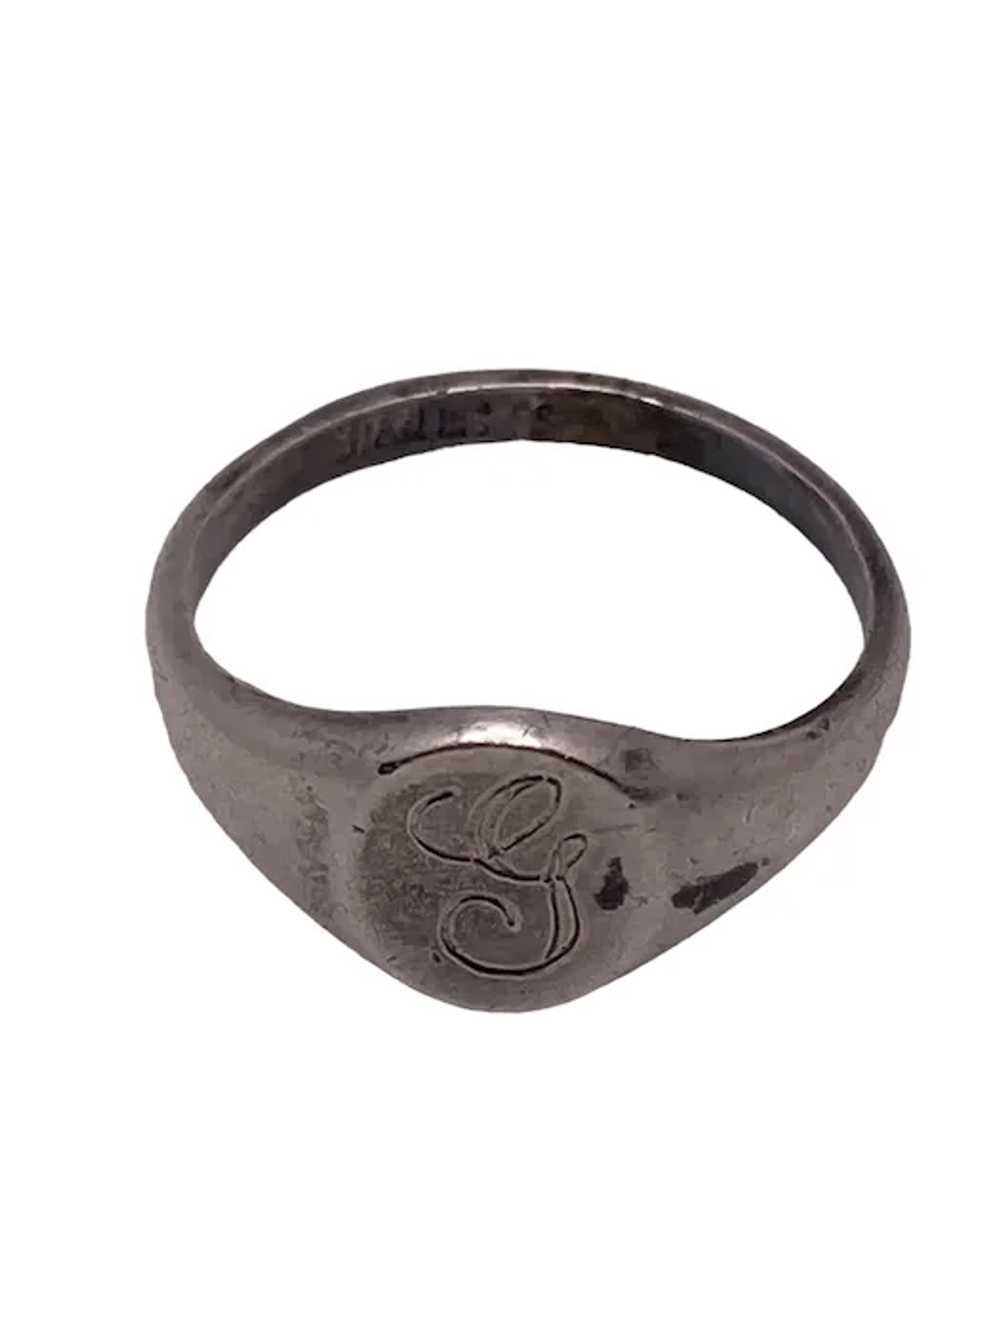 Joseph Esposito Small Sterling Silver Signet Ring - image 6